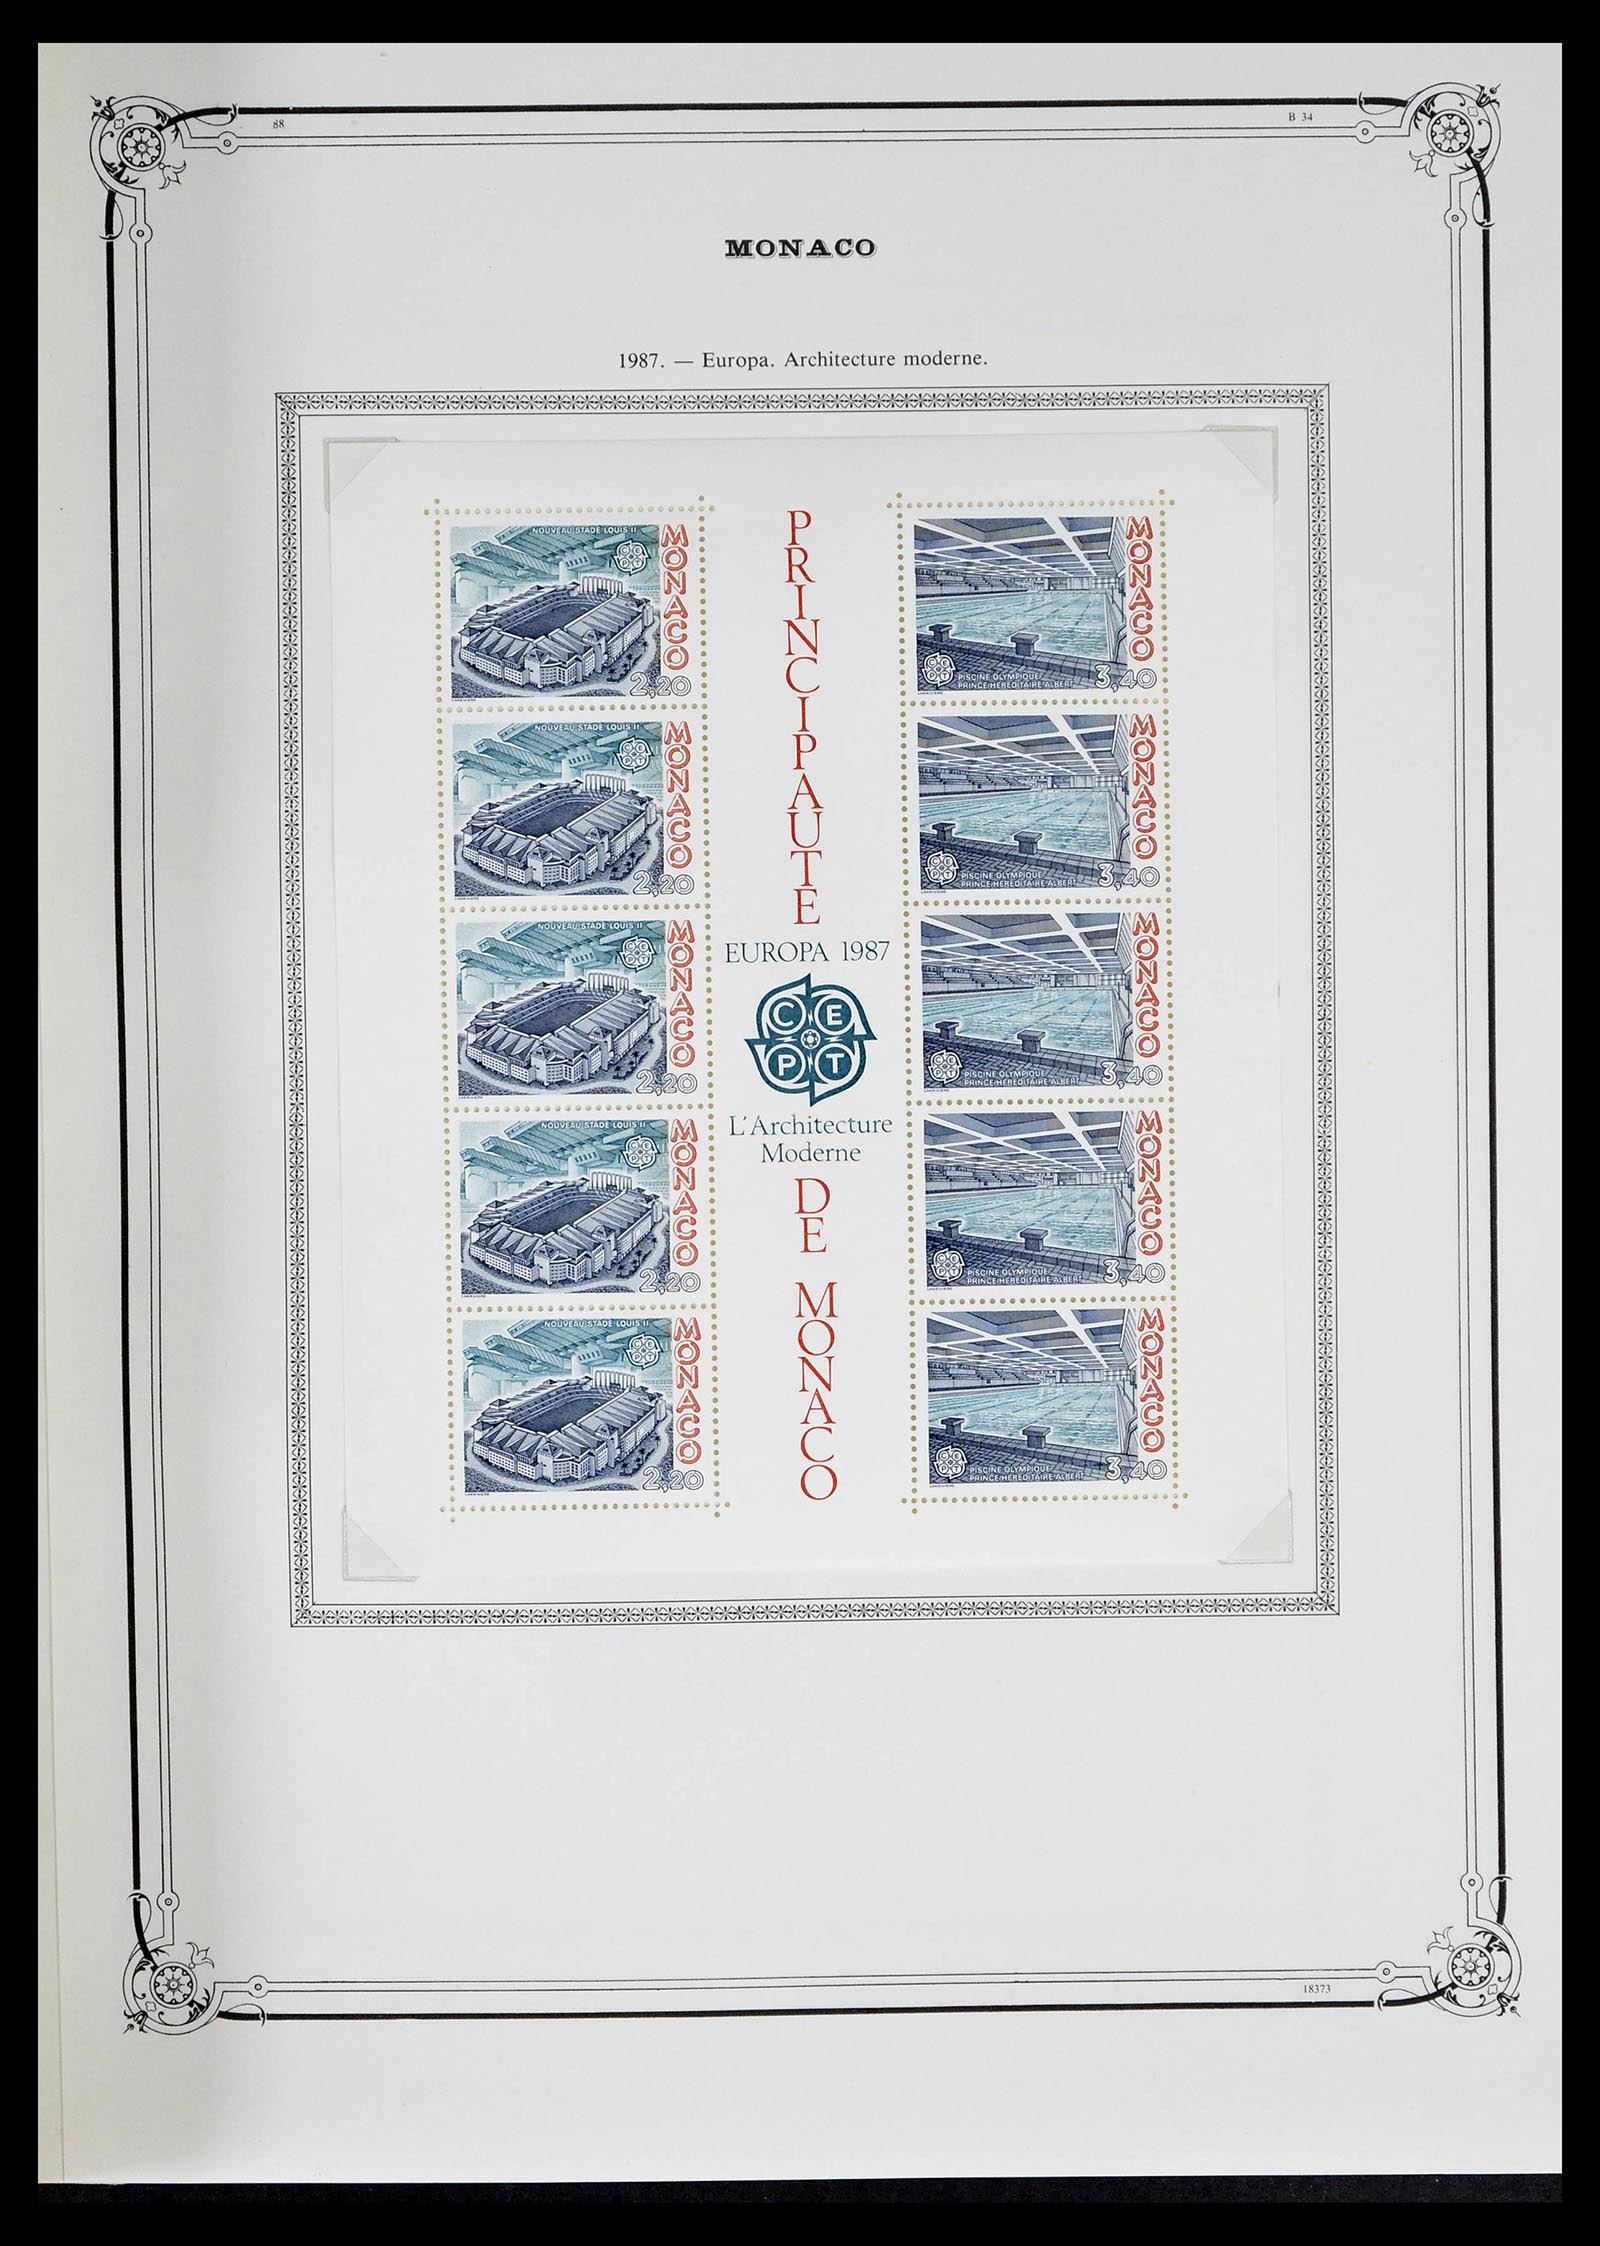 39133 0222 - Stamp collection 39133 Monaco 1885-1996.